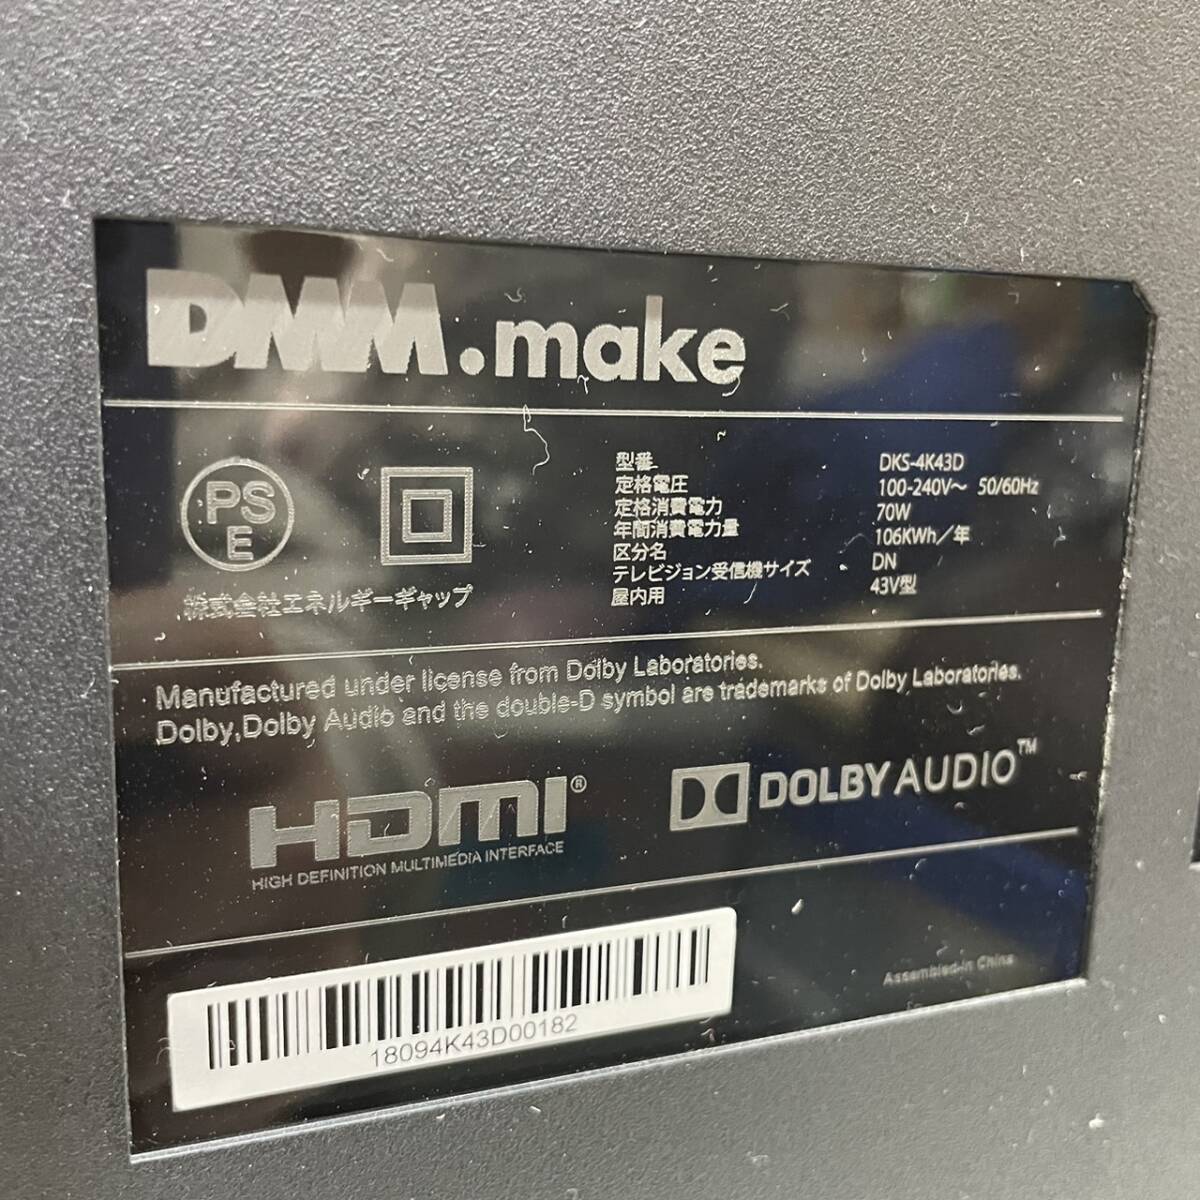 DMM.make 4K対応 スピーカー内蔵 43型液晶モニター 壁掛け用 DKS-4K43D UHDパネル搭載ディスプレイ 2018年製 中古家電_画像7